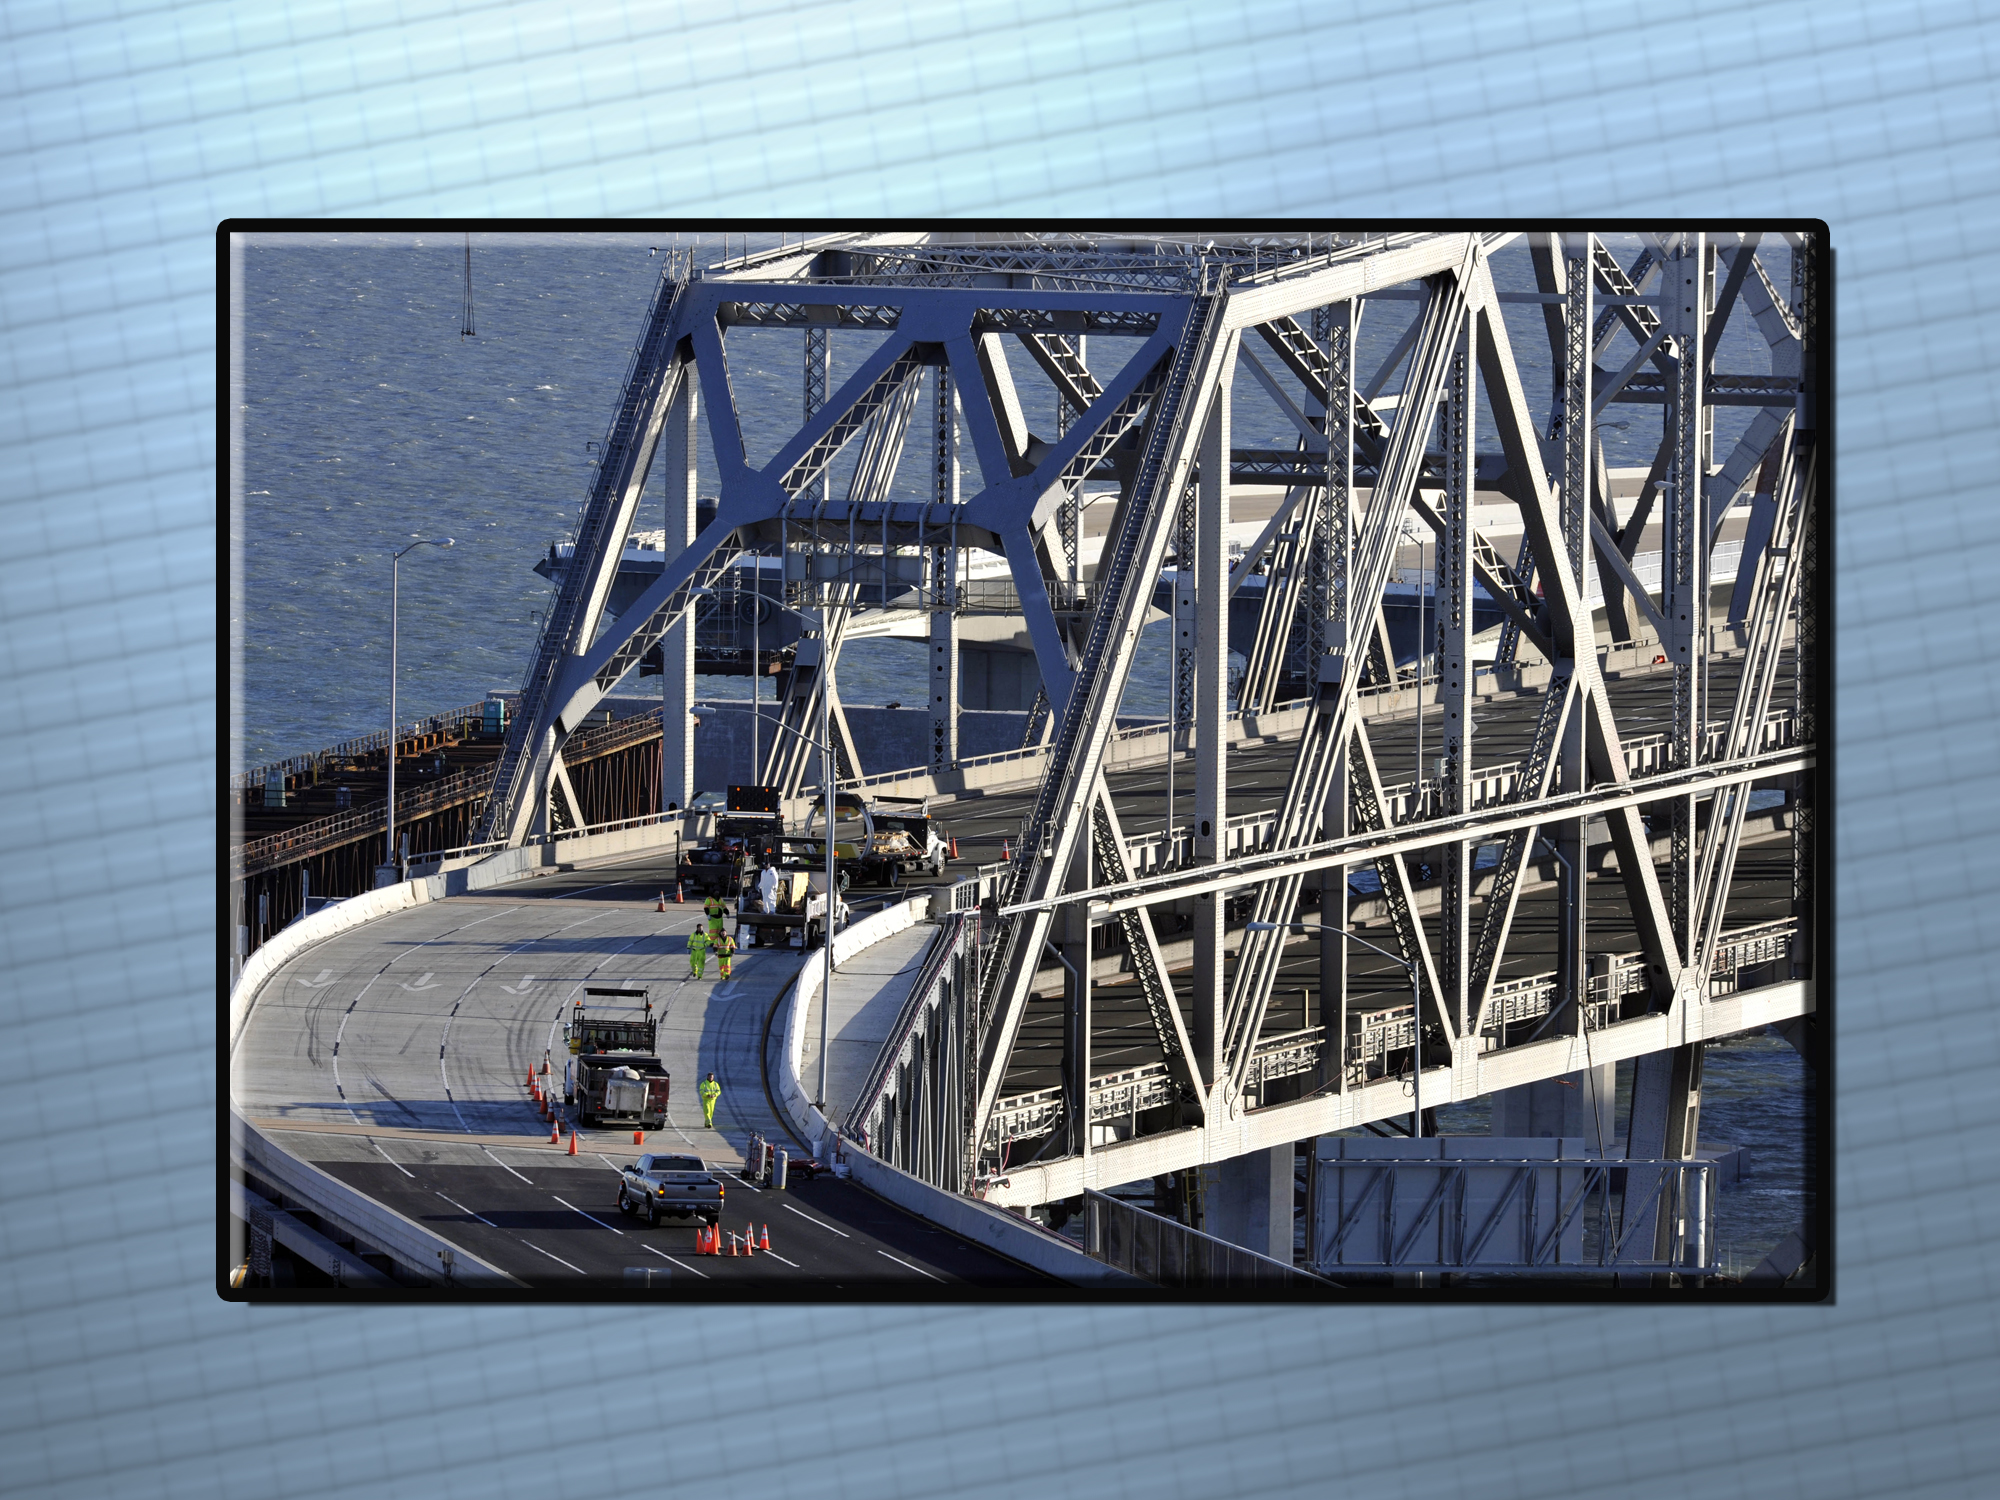 sf oakland bay bridge problems